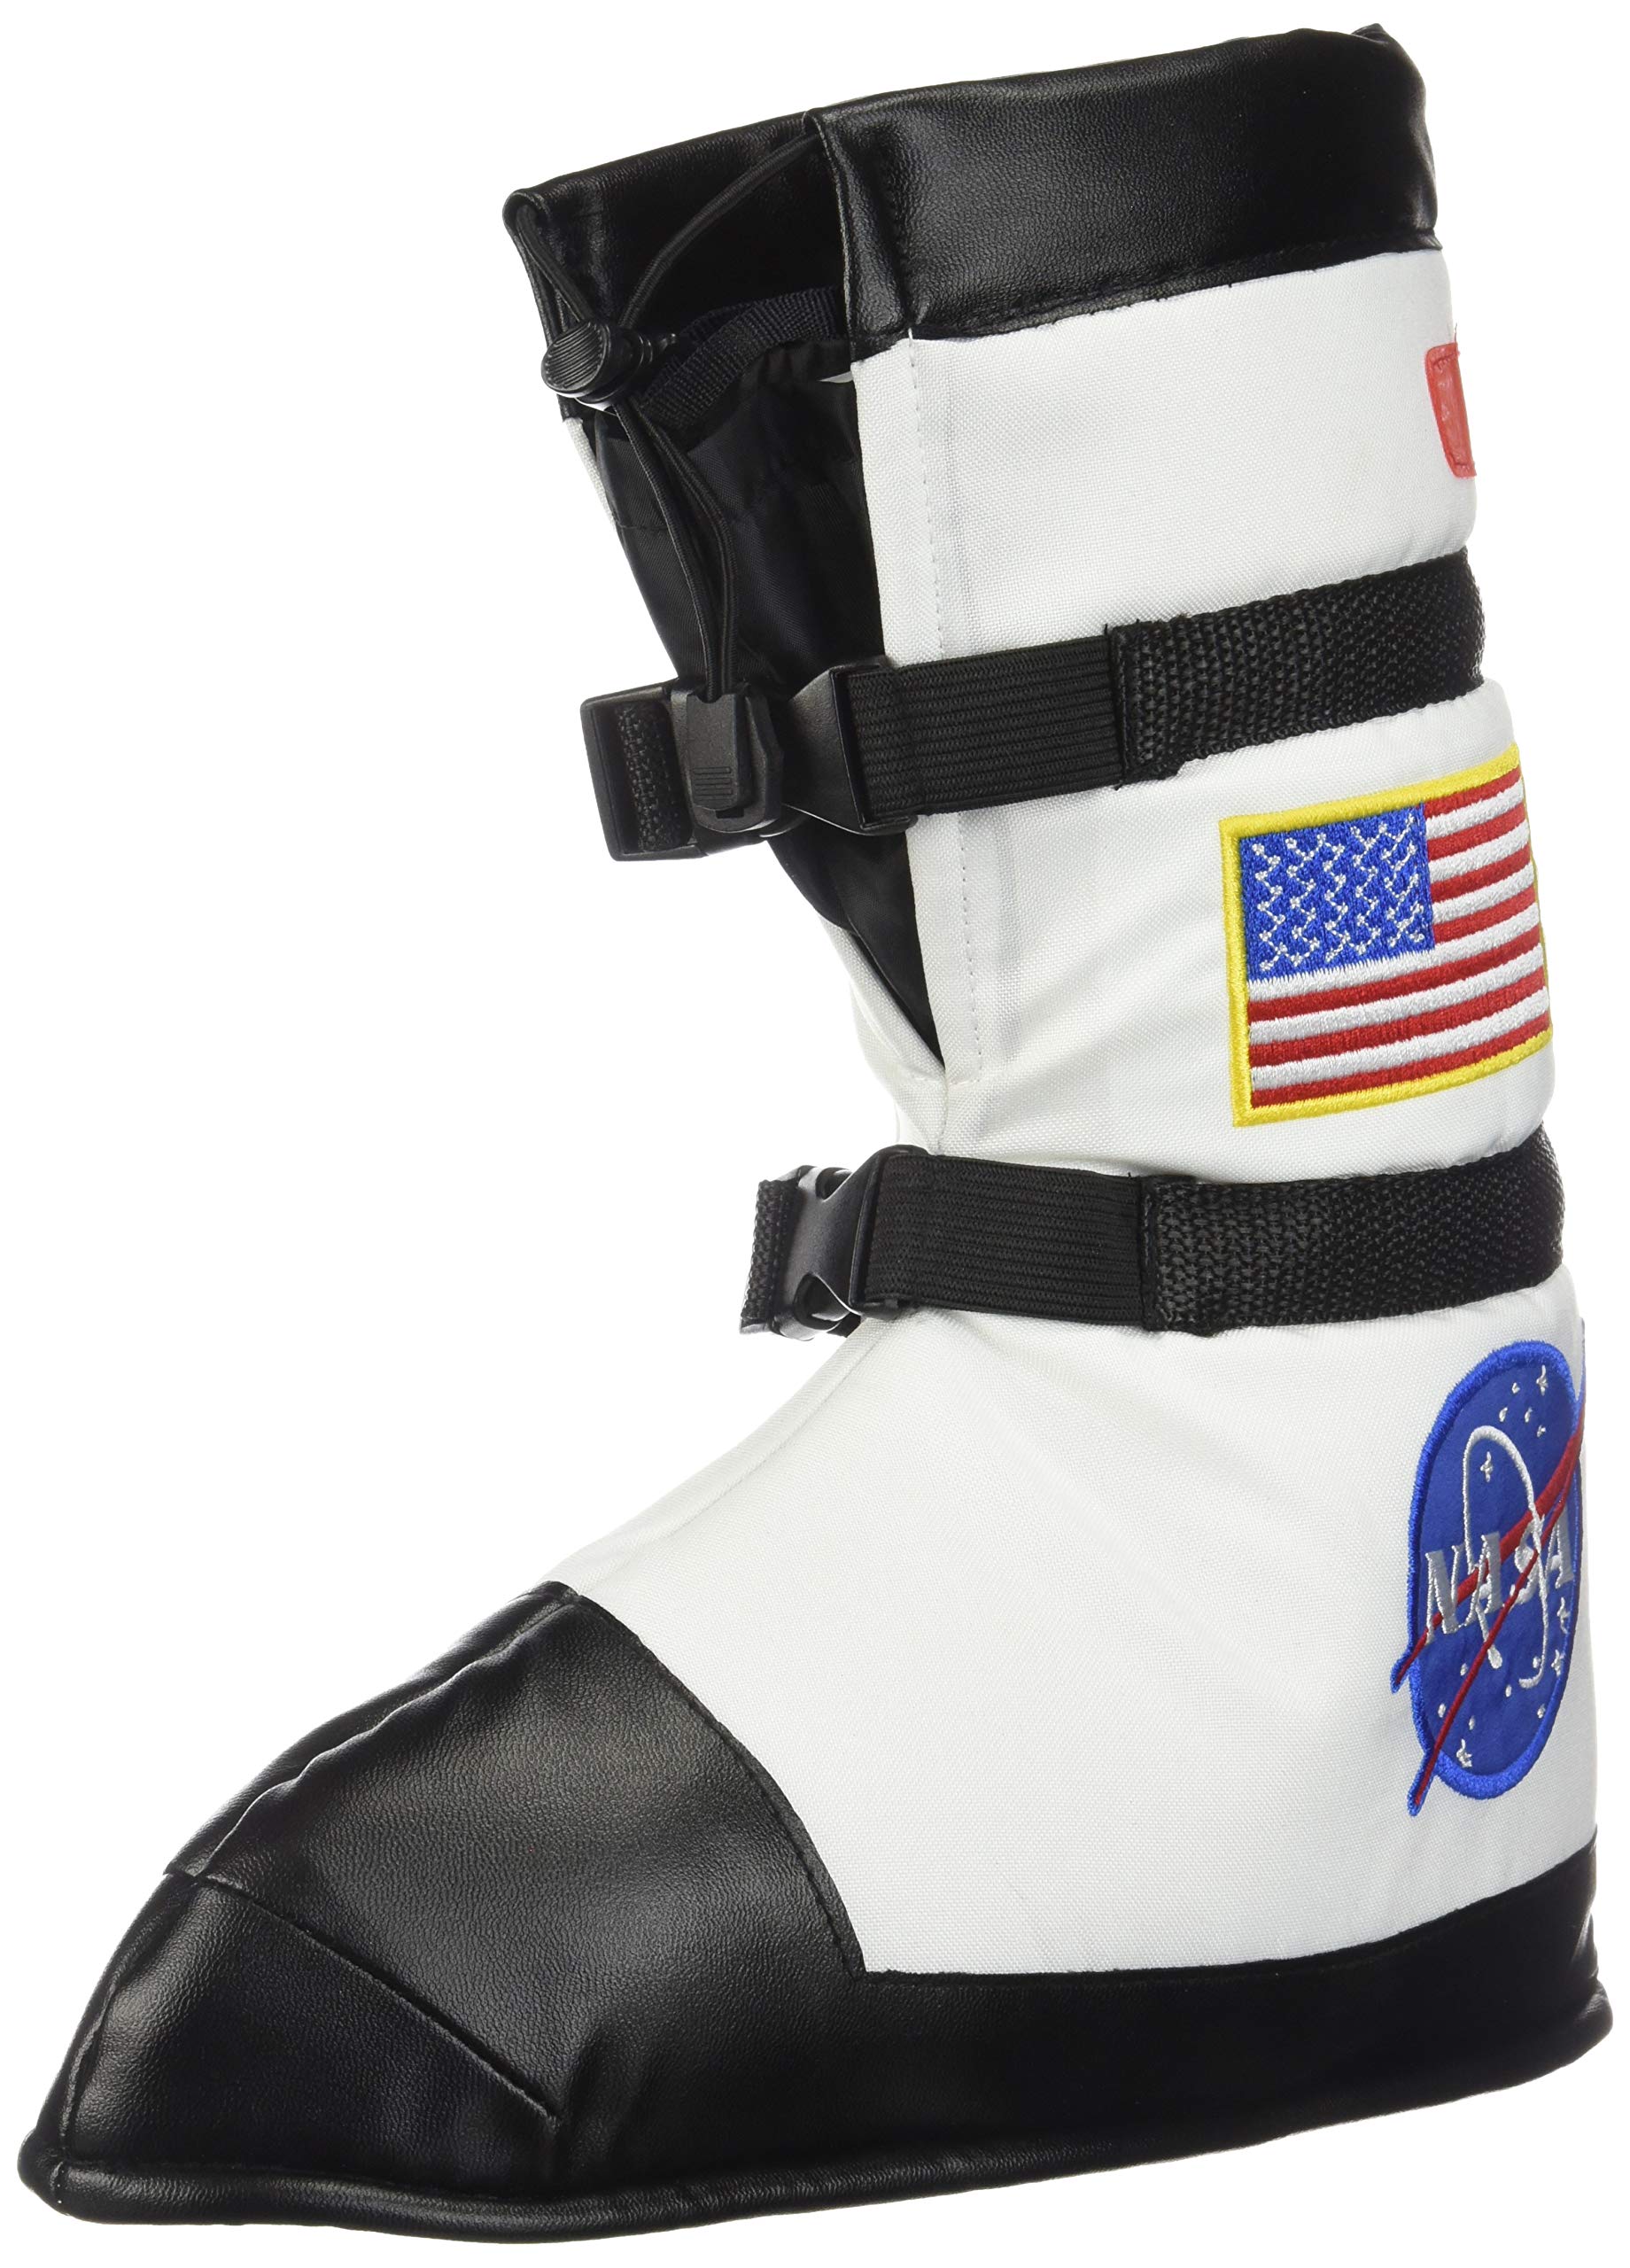 Astronaut Boots